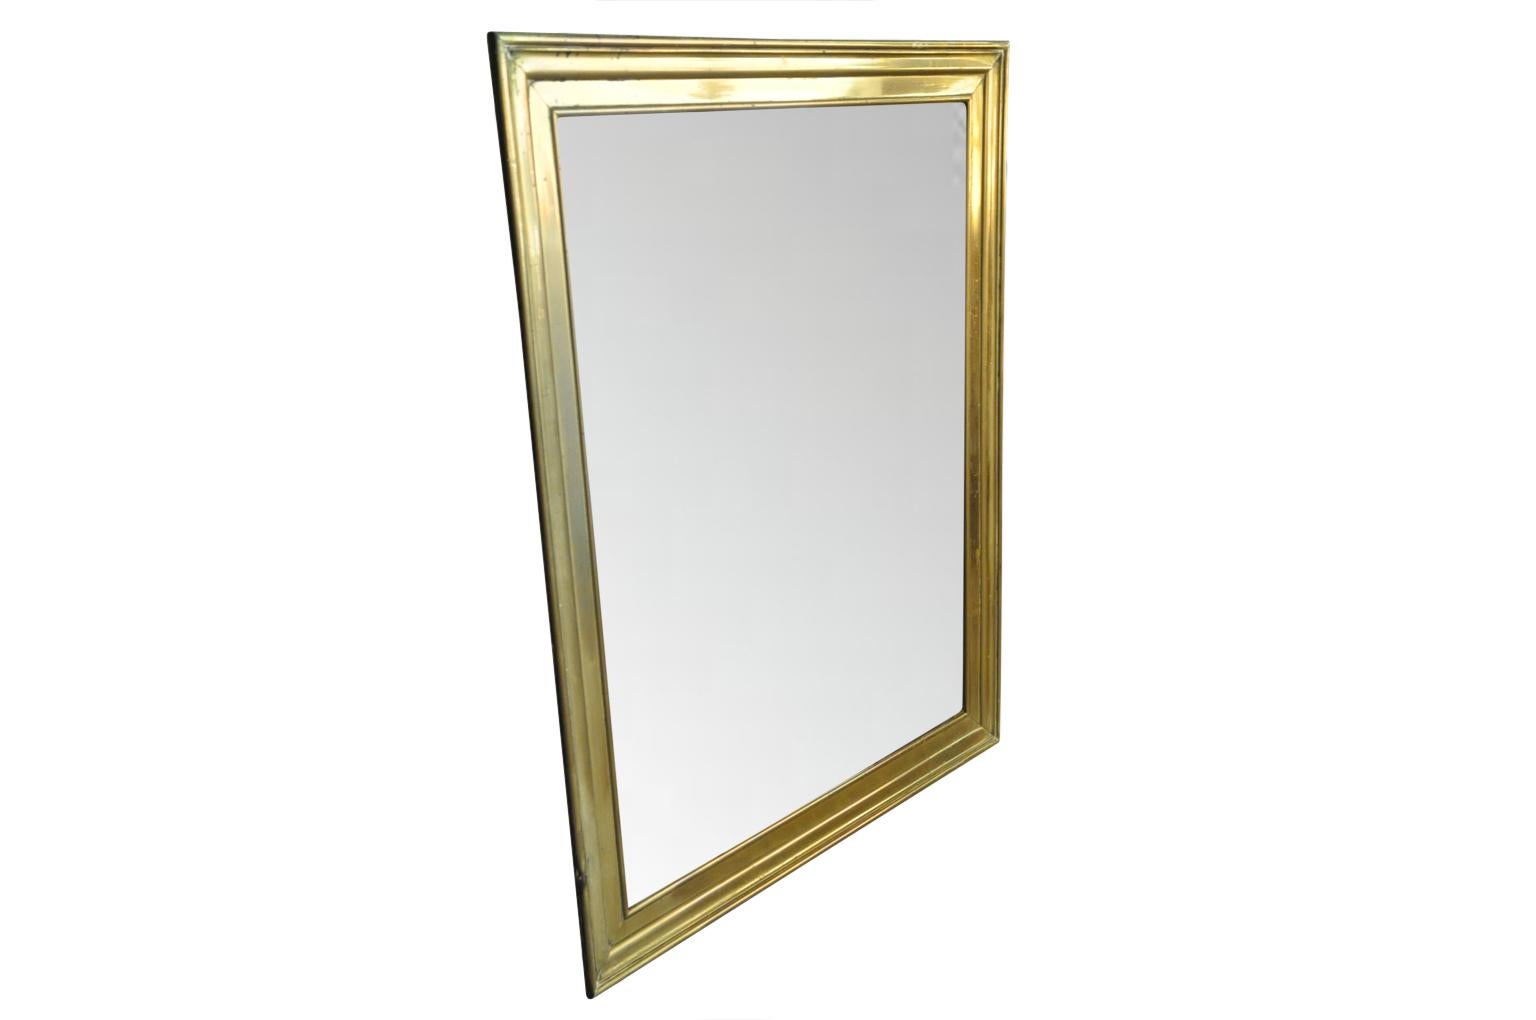 Striking 19th Century French Mirror In Good Condition For Sale In Atlanta, GA